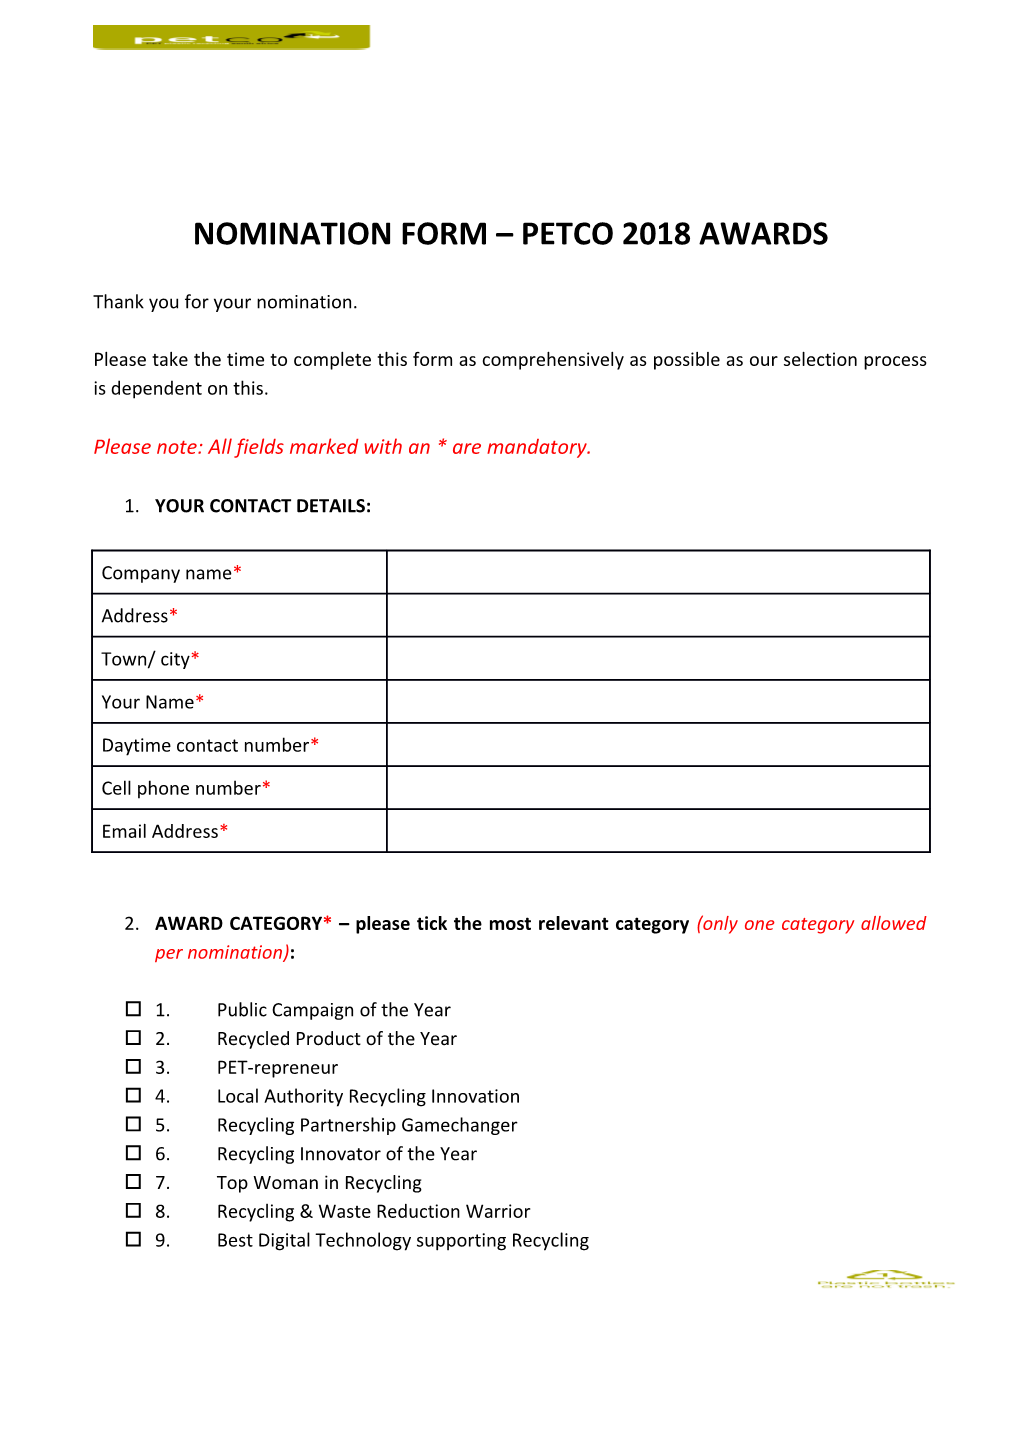 Nomination Form Petco 2018 Awards